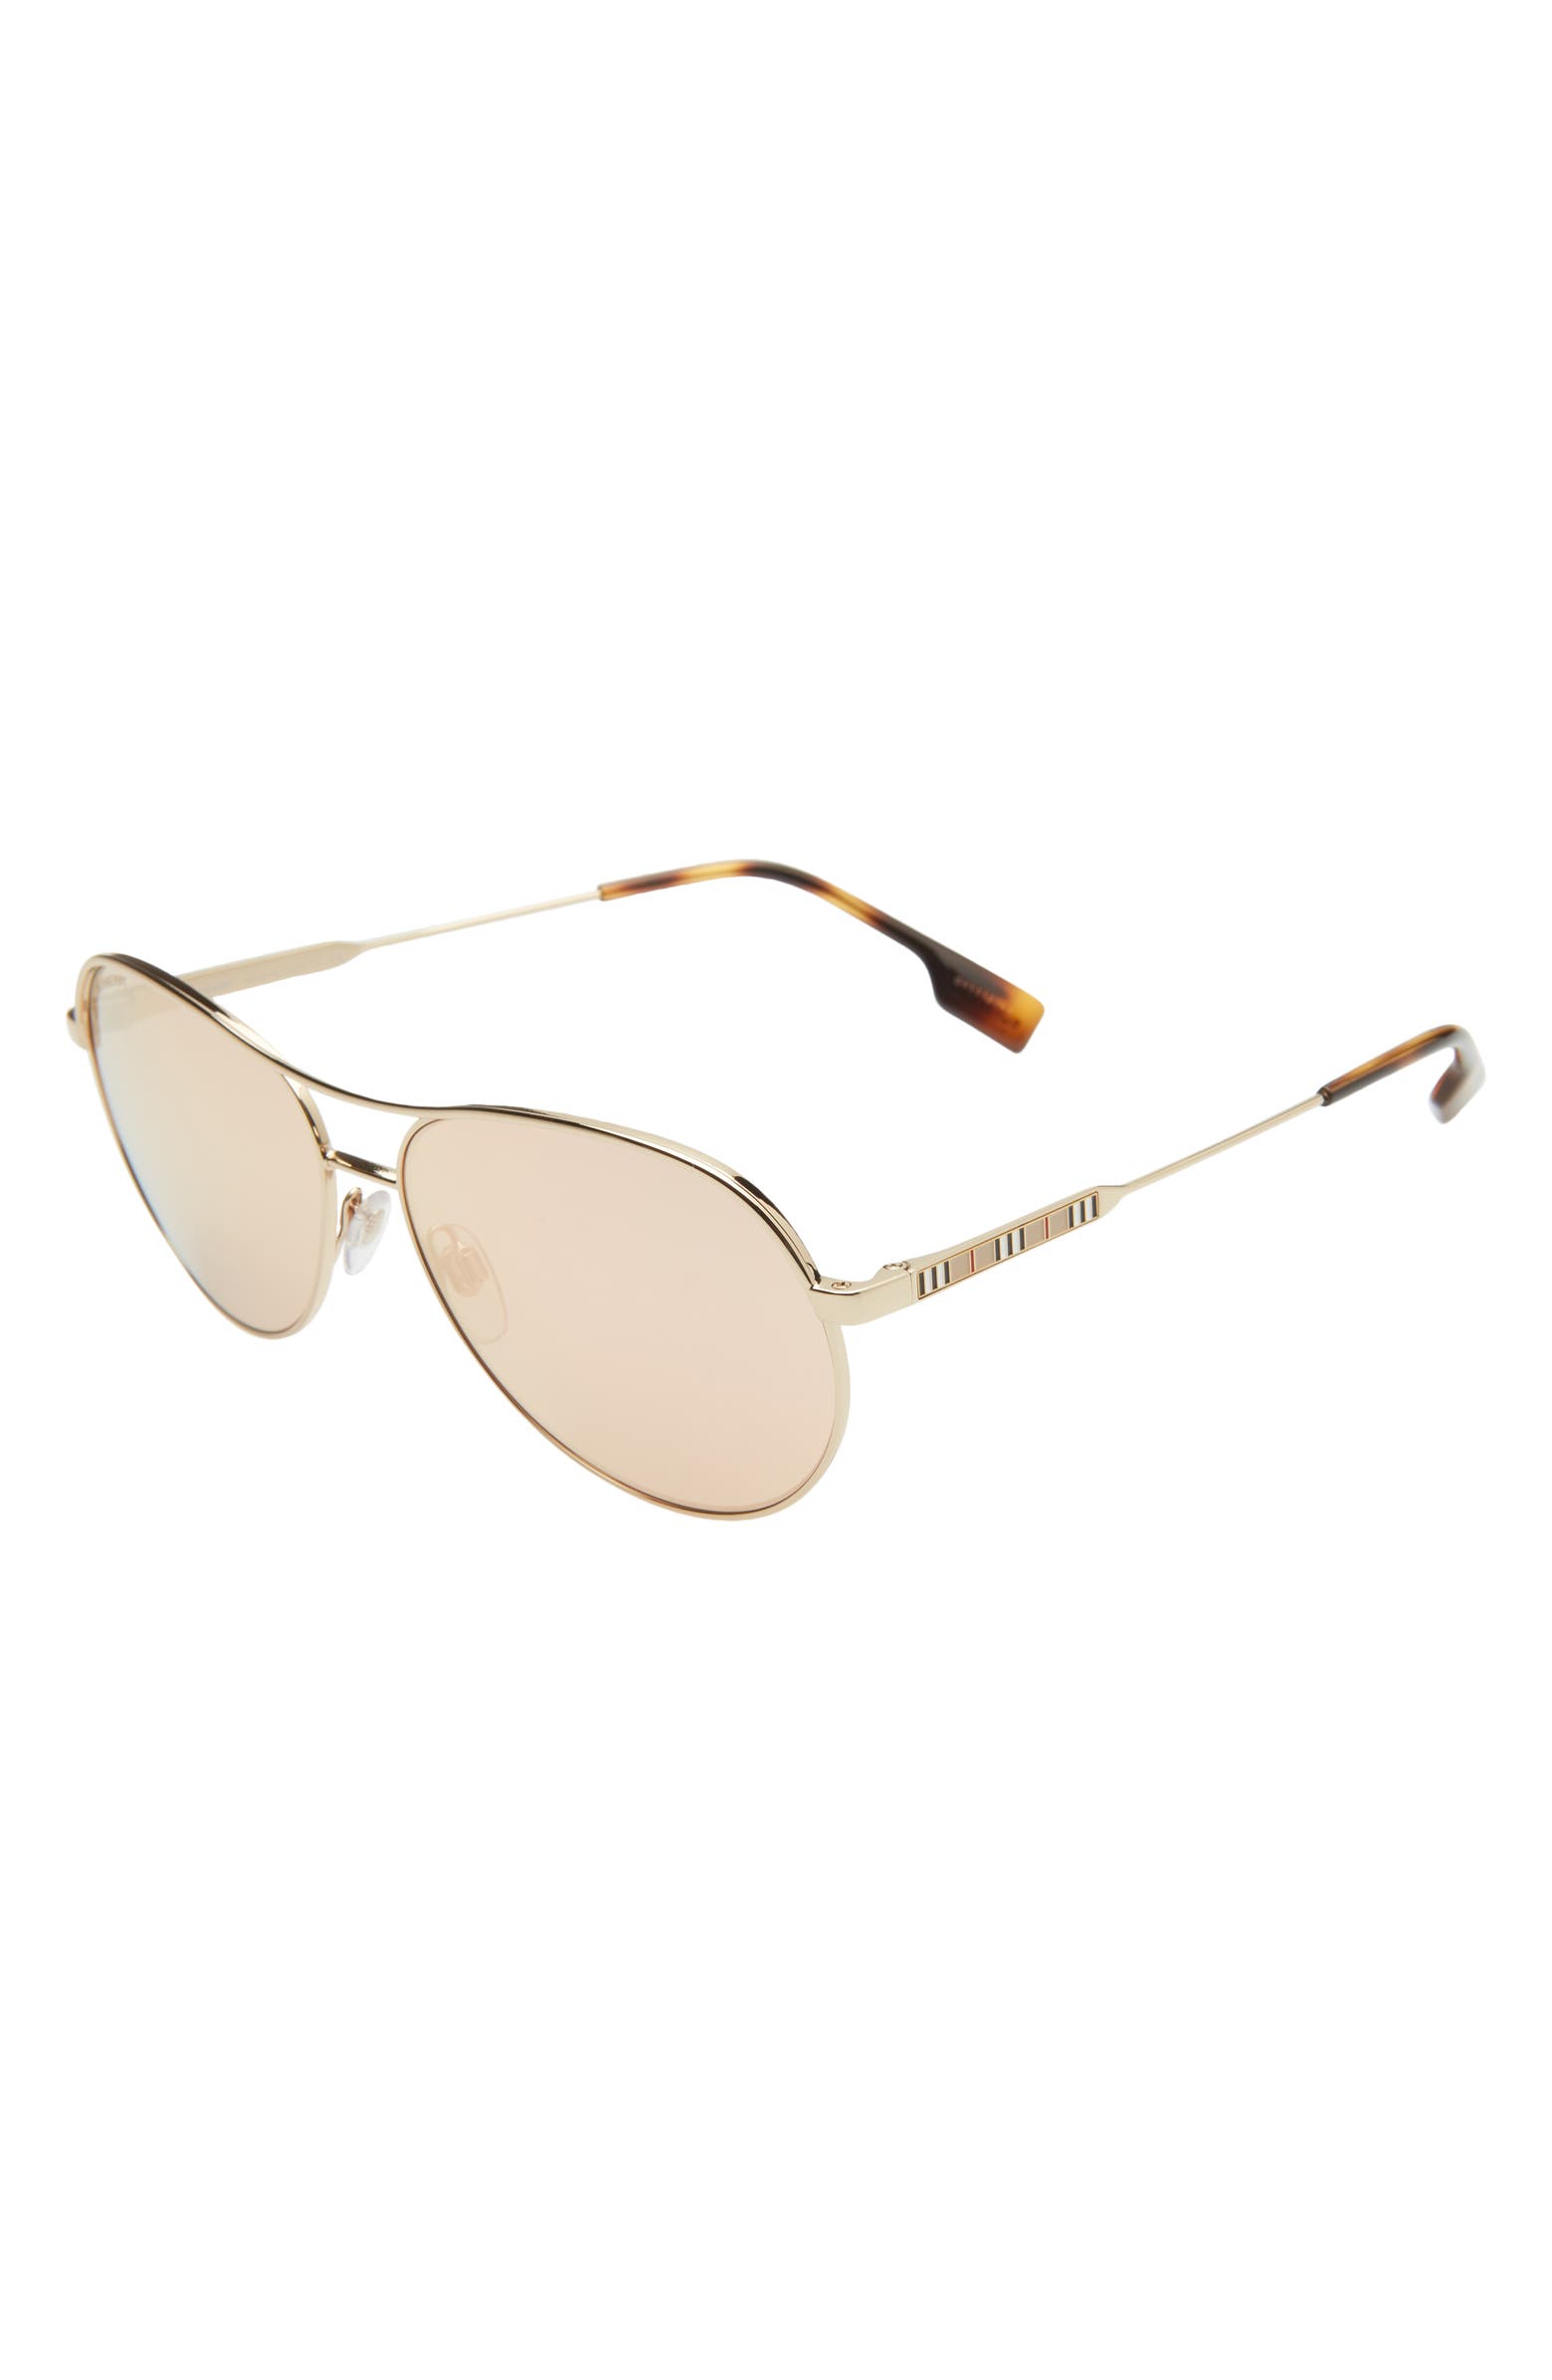 Burberry 59mm Mirrored Pilot Sunglasses | Nordstromrack